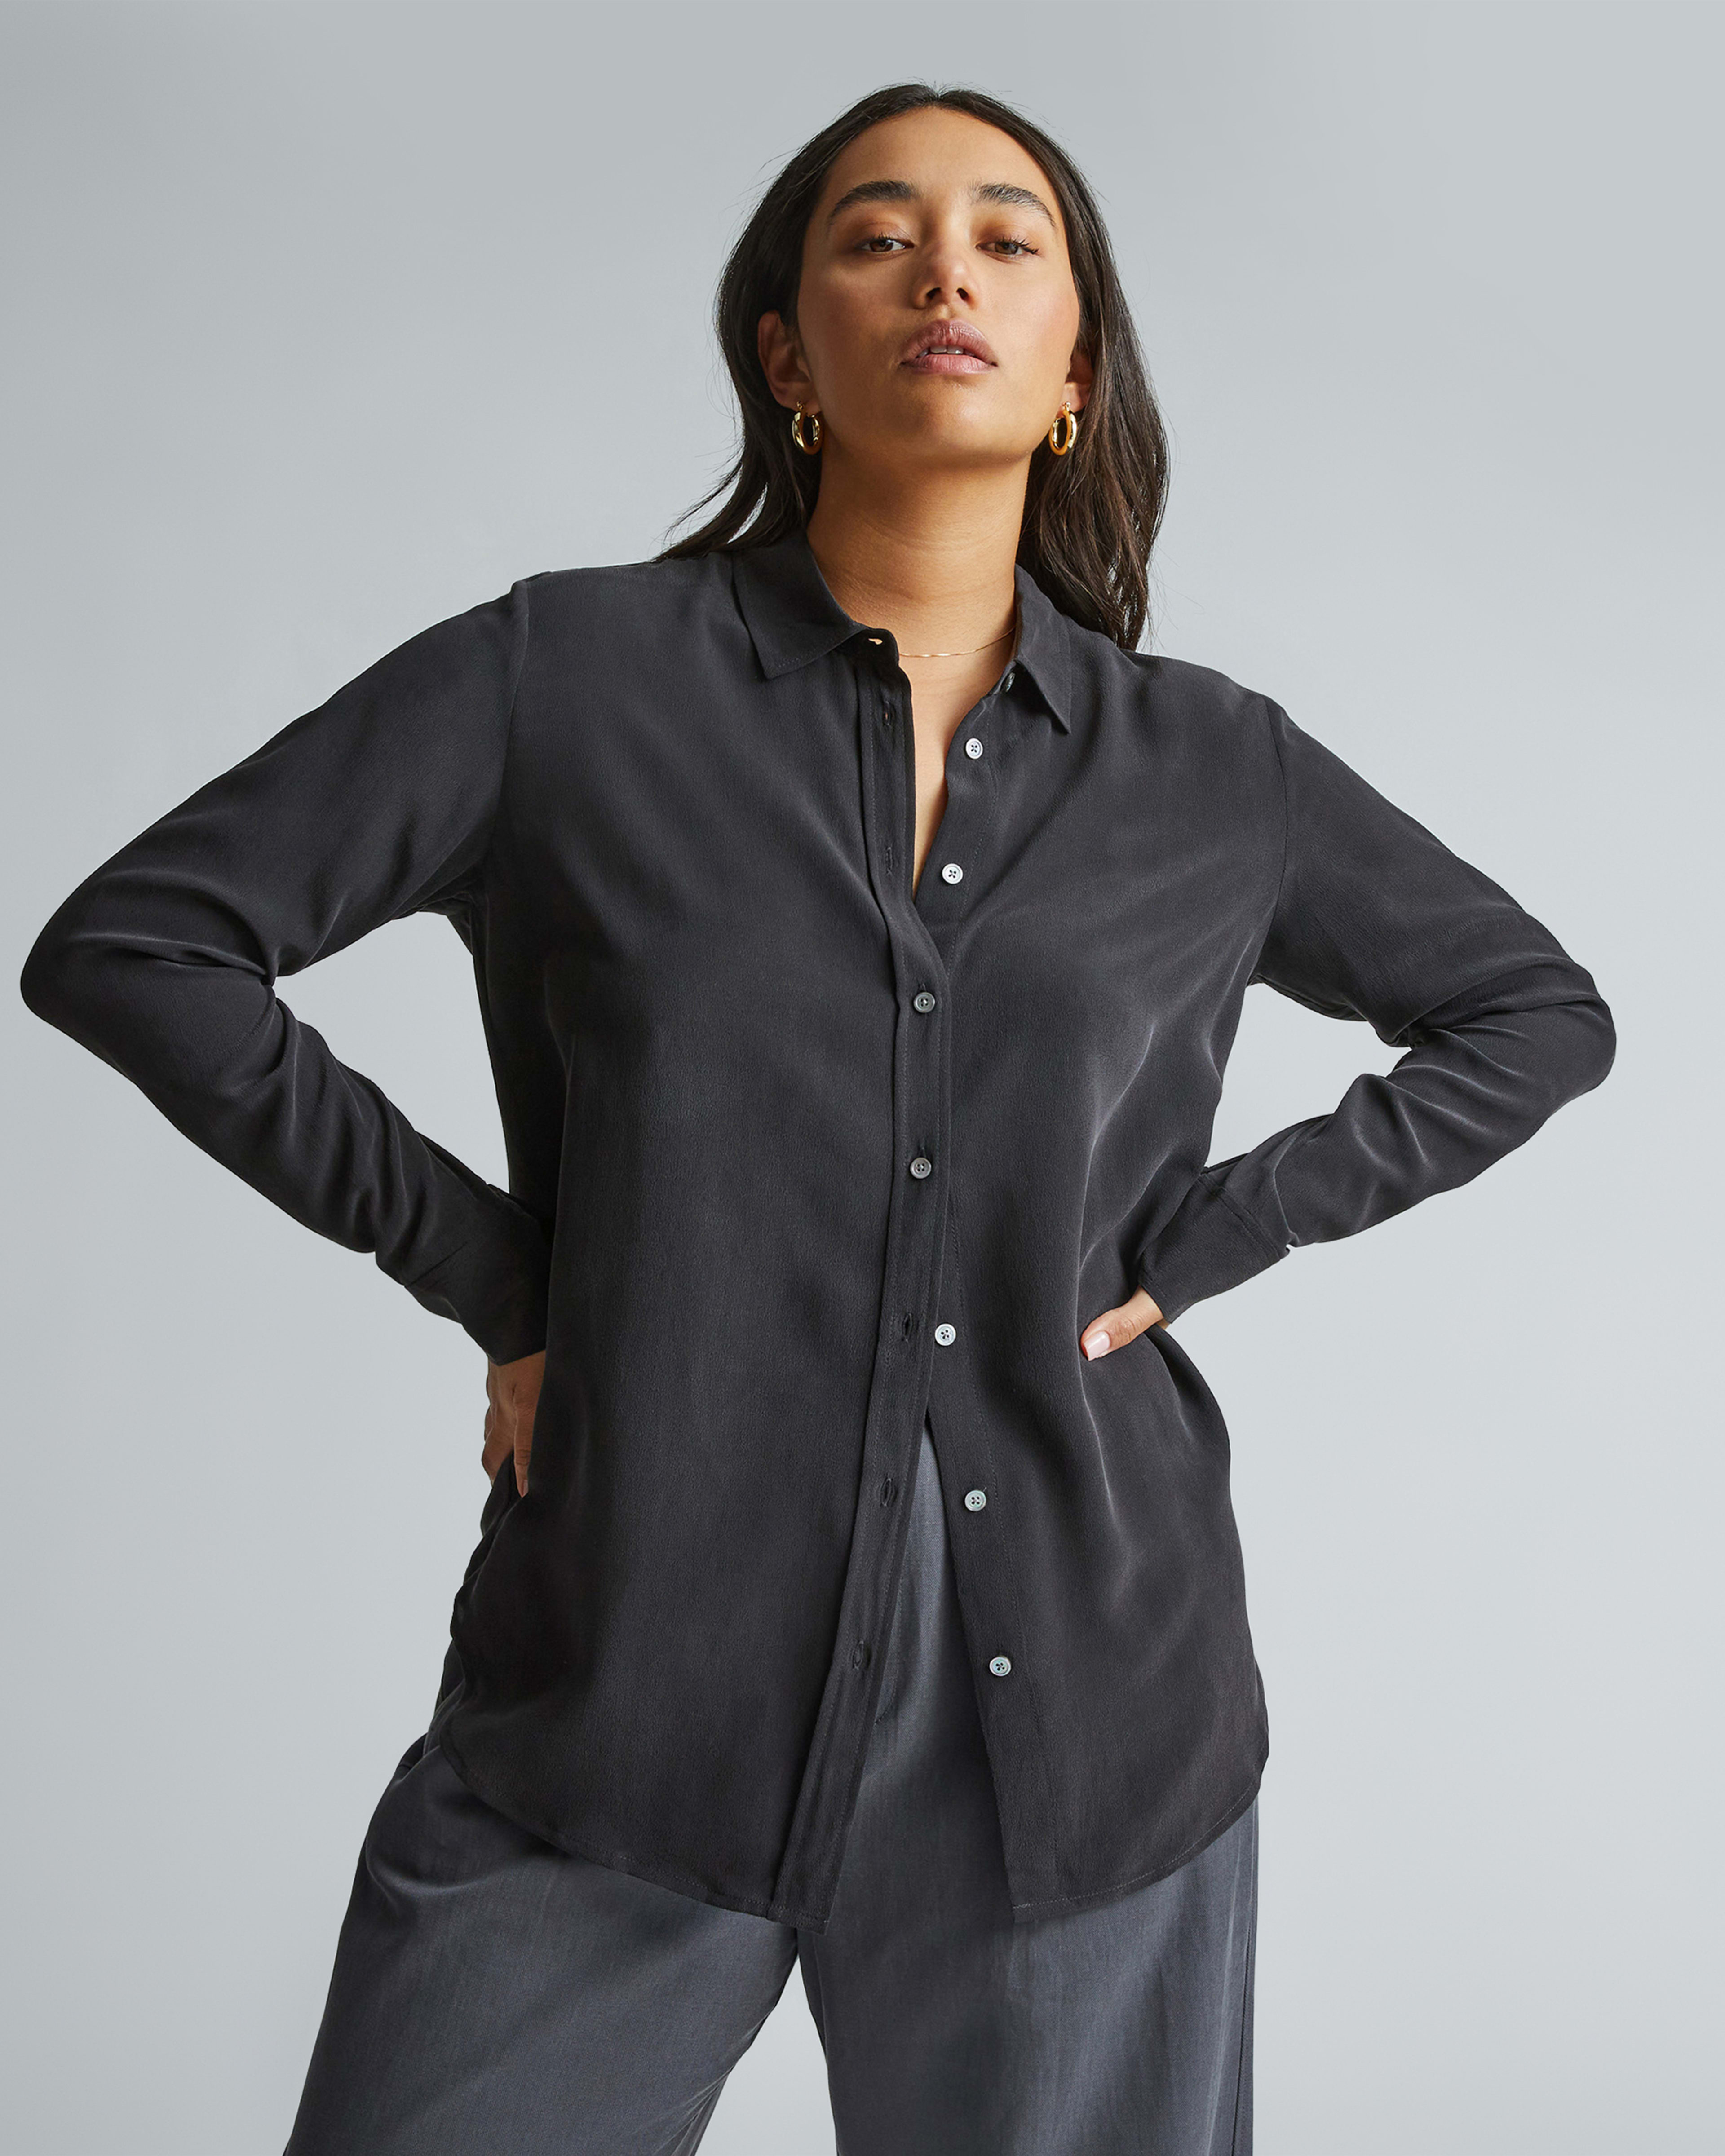  Silk - Women's Blouses & Button-Down Shirts / Women's